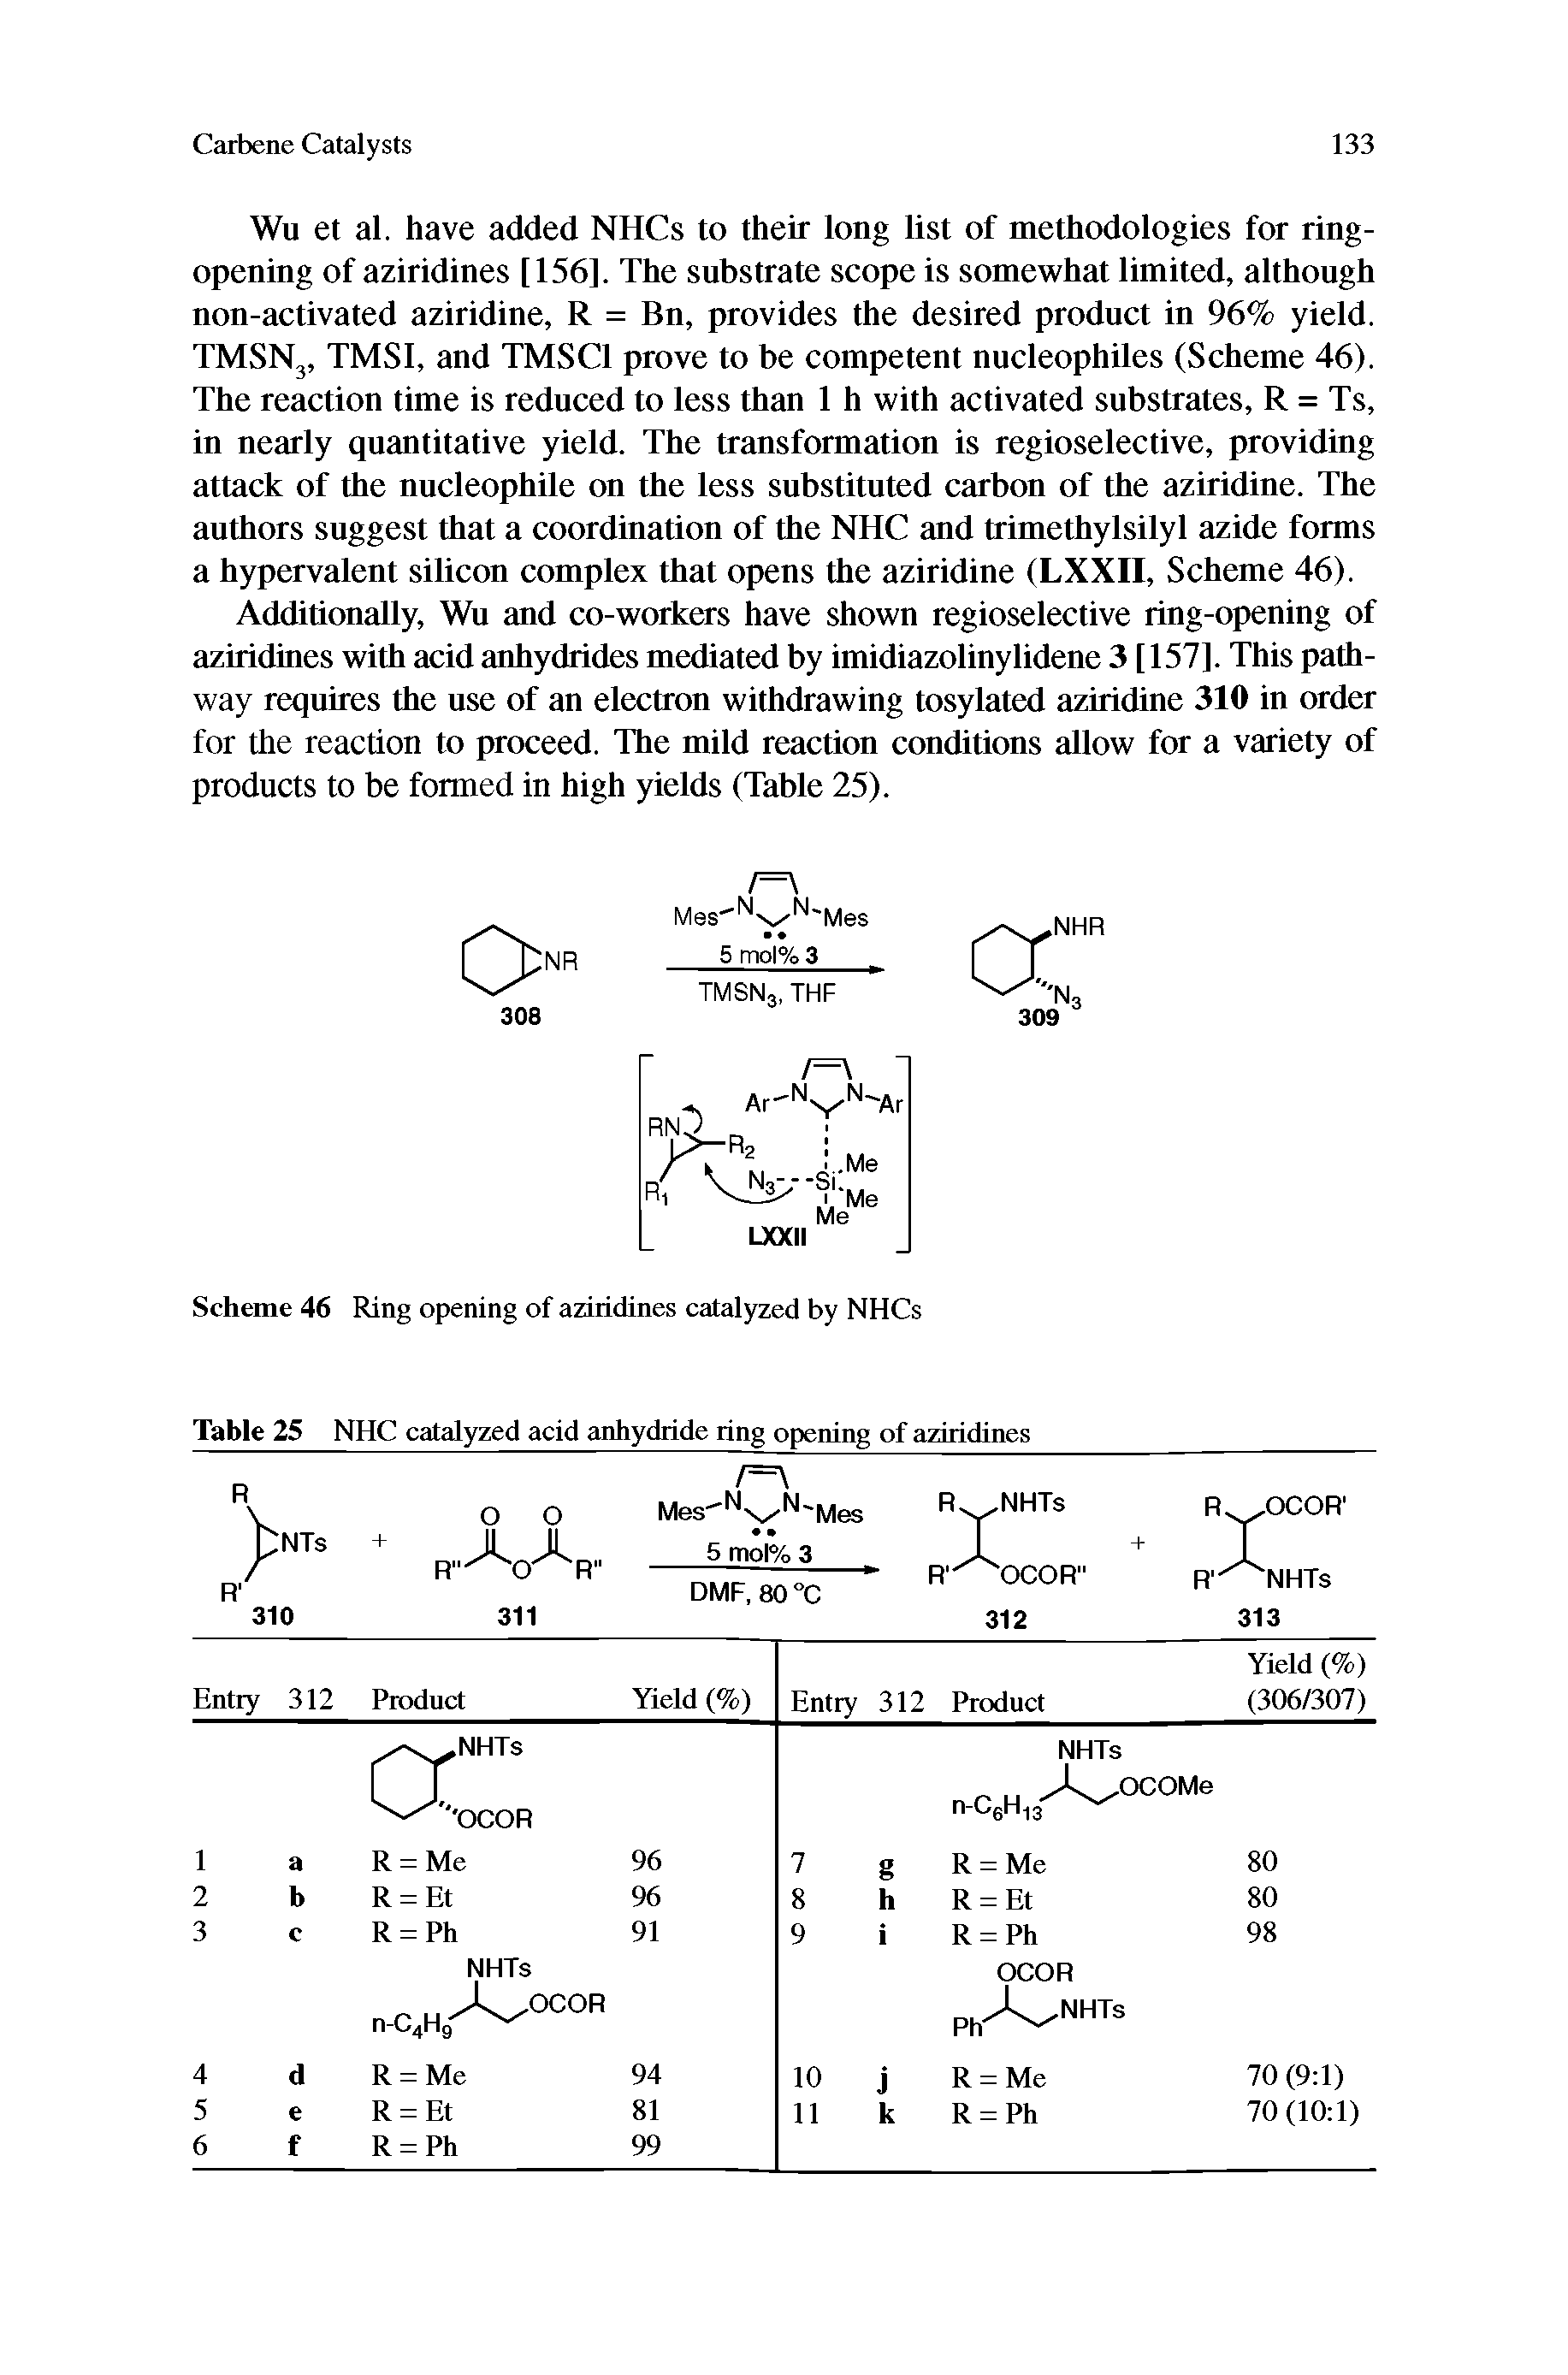 Table 25 NHC catalyzed acid anhydride ring opening of aziridines...